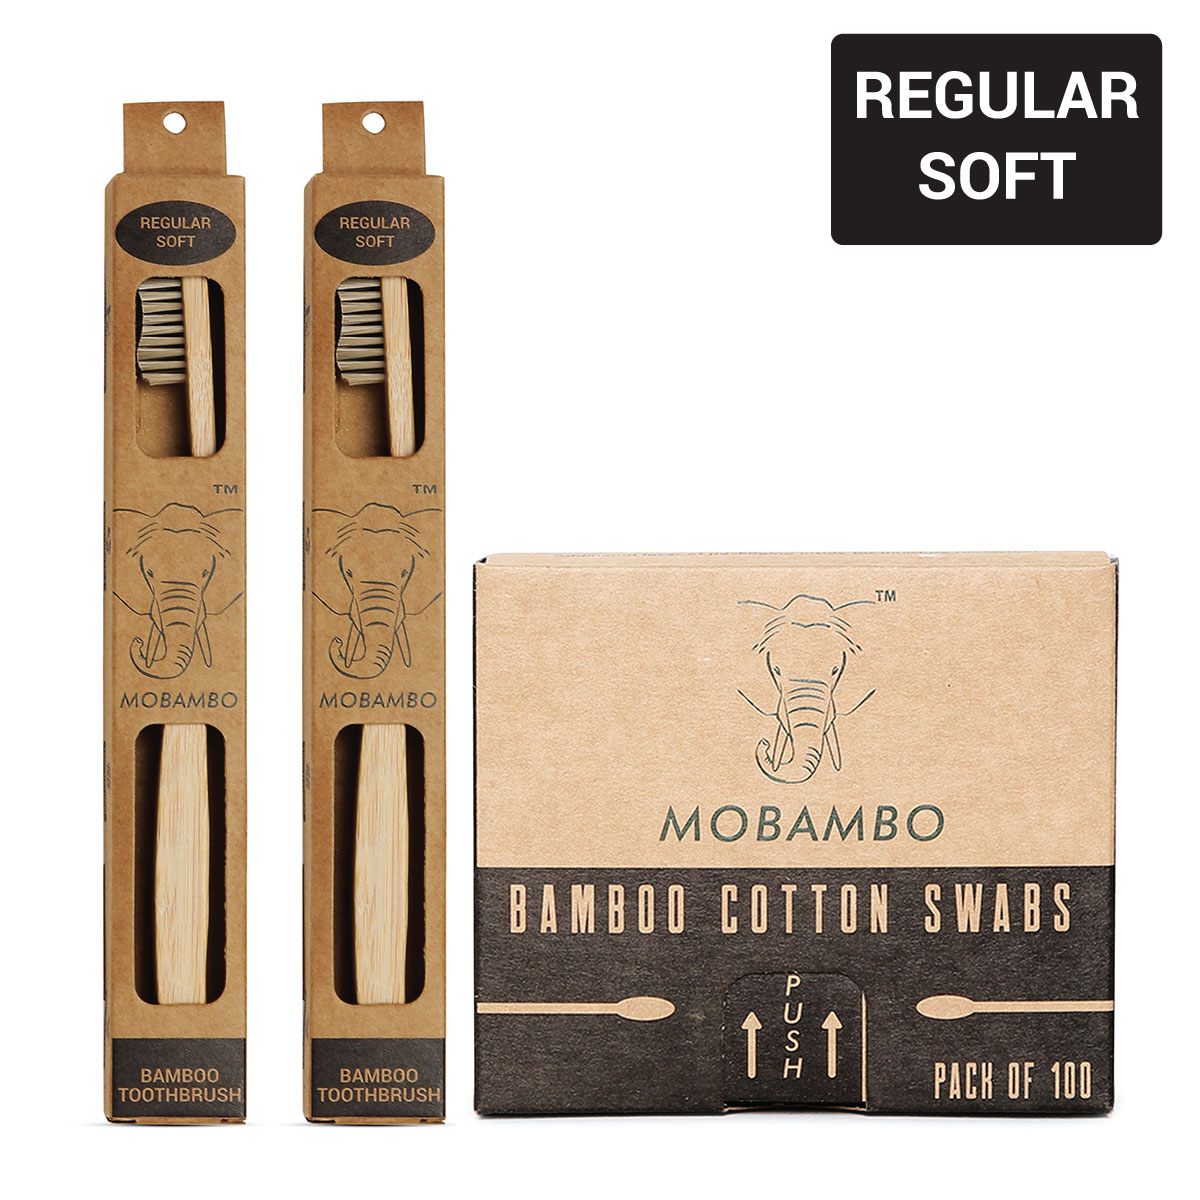 Mobambo Regular Soft Toothbrush and Cotton Swab Combo